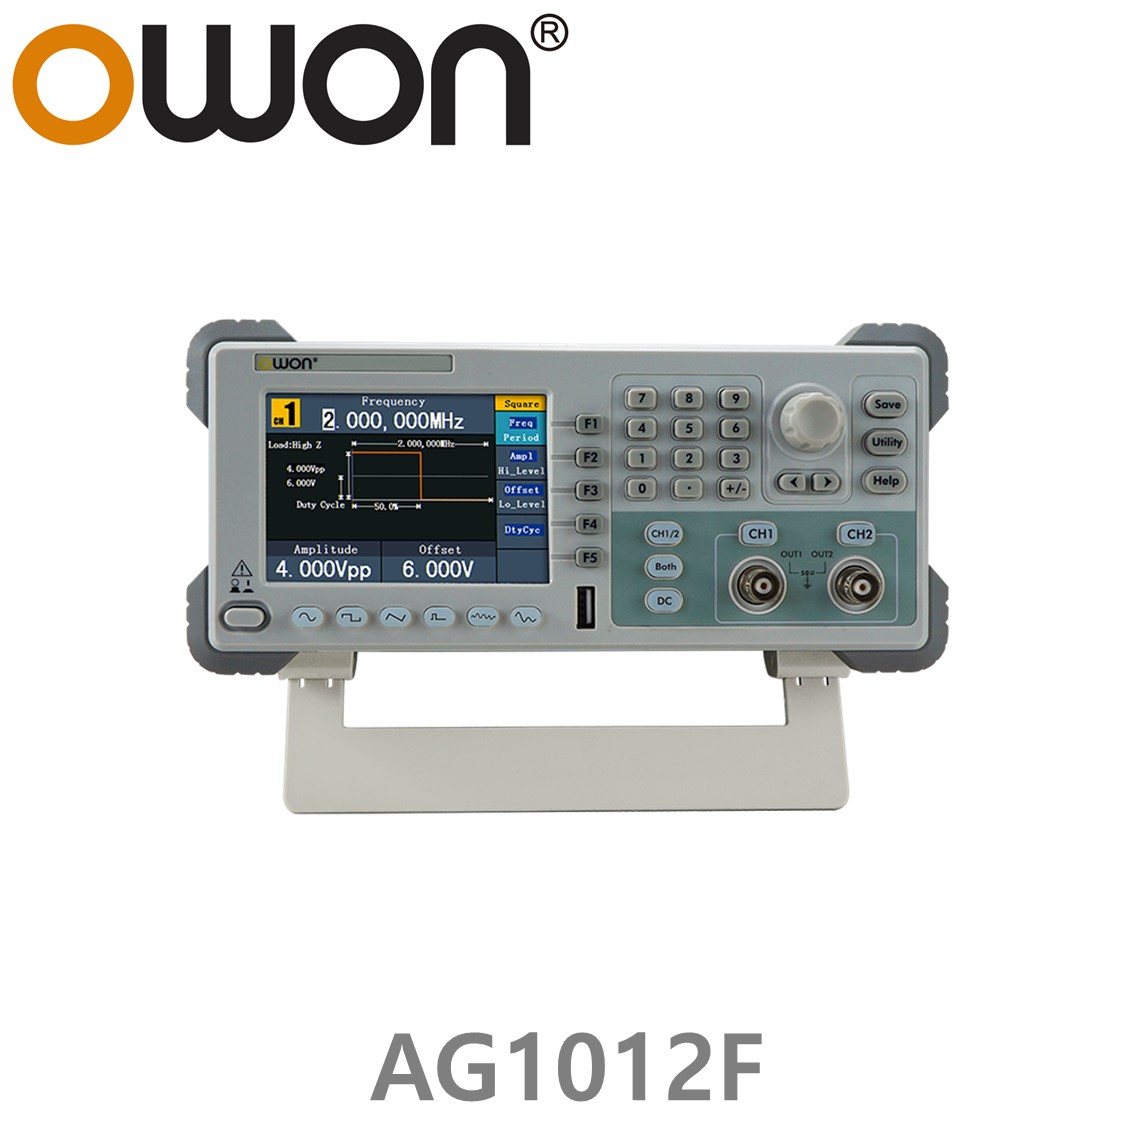 [ OWON ] AG1012F 임의 파형발생기 2CH, 10MHz, 125MS/s, 주파수카운터포함 포괄적 변조, AM, FM, PM, FSK